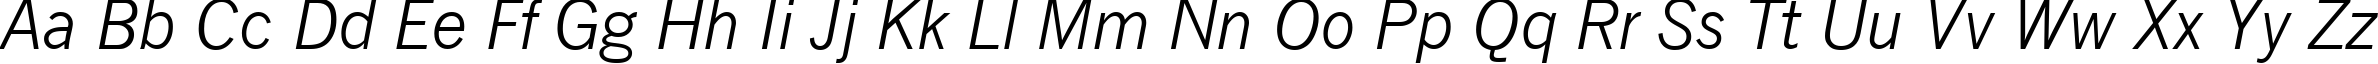 Пример написания английского алфавита шрифтом News Gothic MT Italic